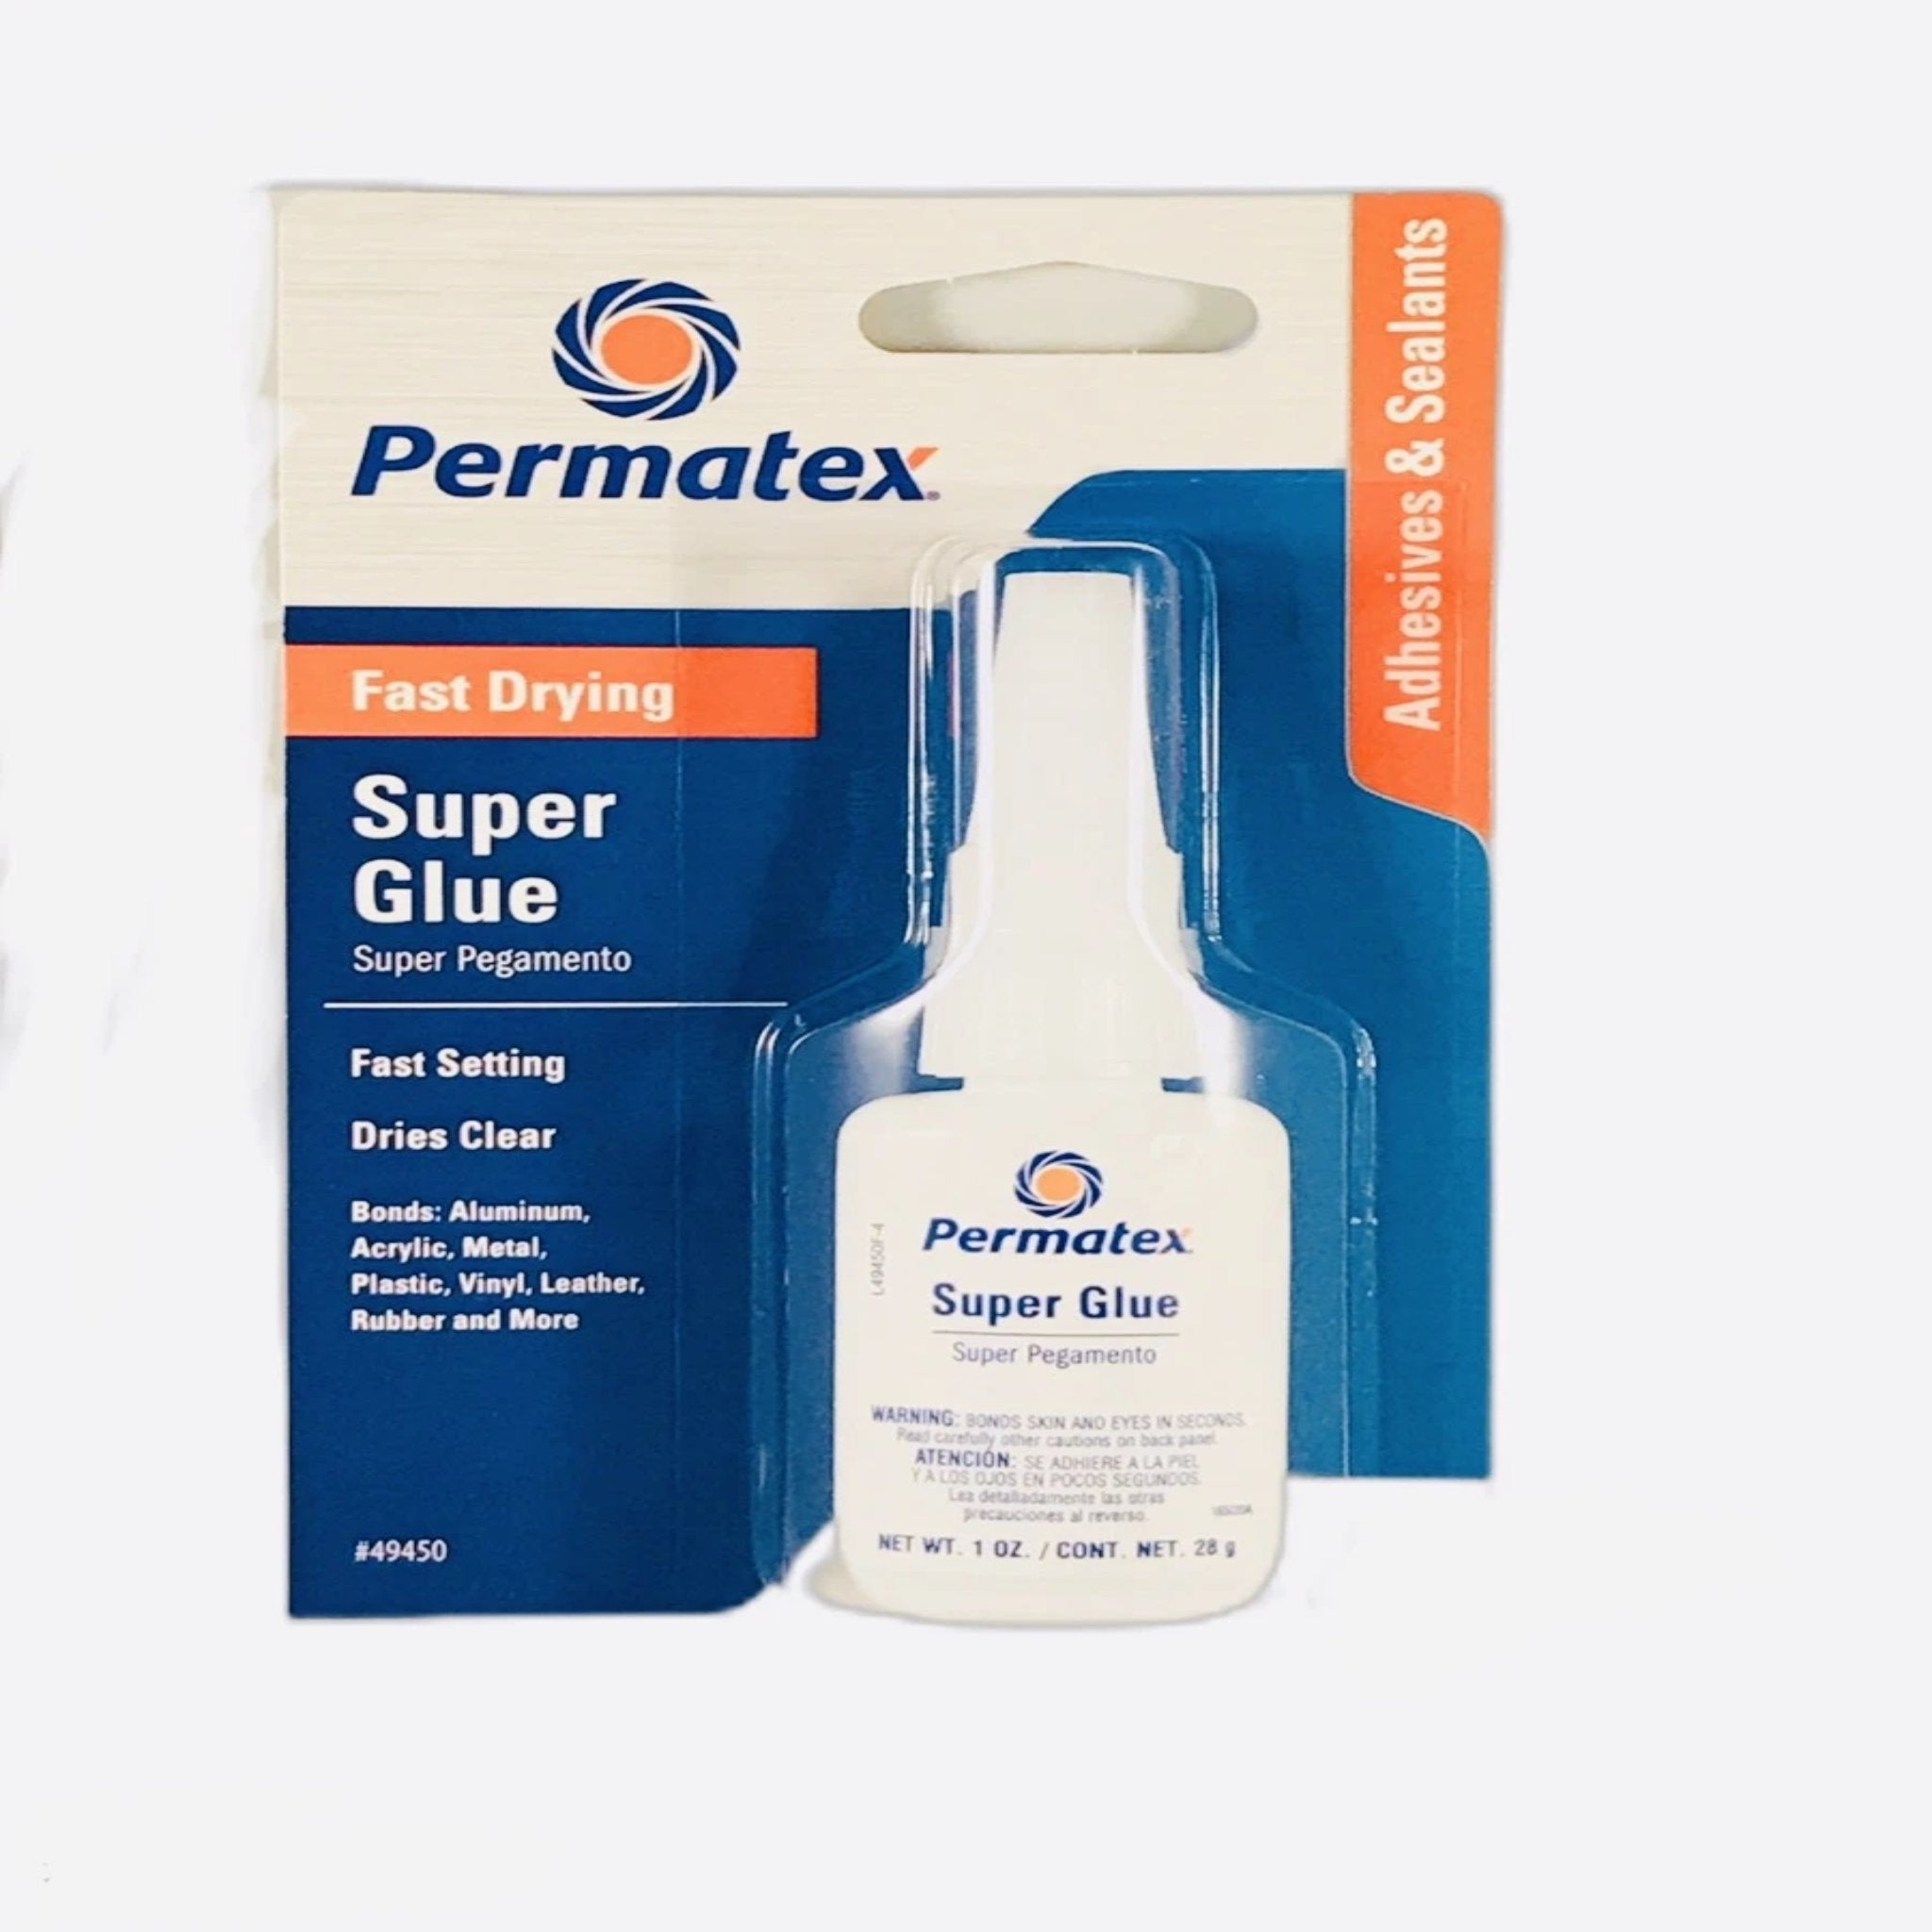 PERMATEX FAST DRYING SUPER GLUE 1 OZ 49450